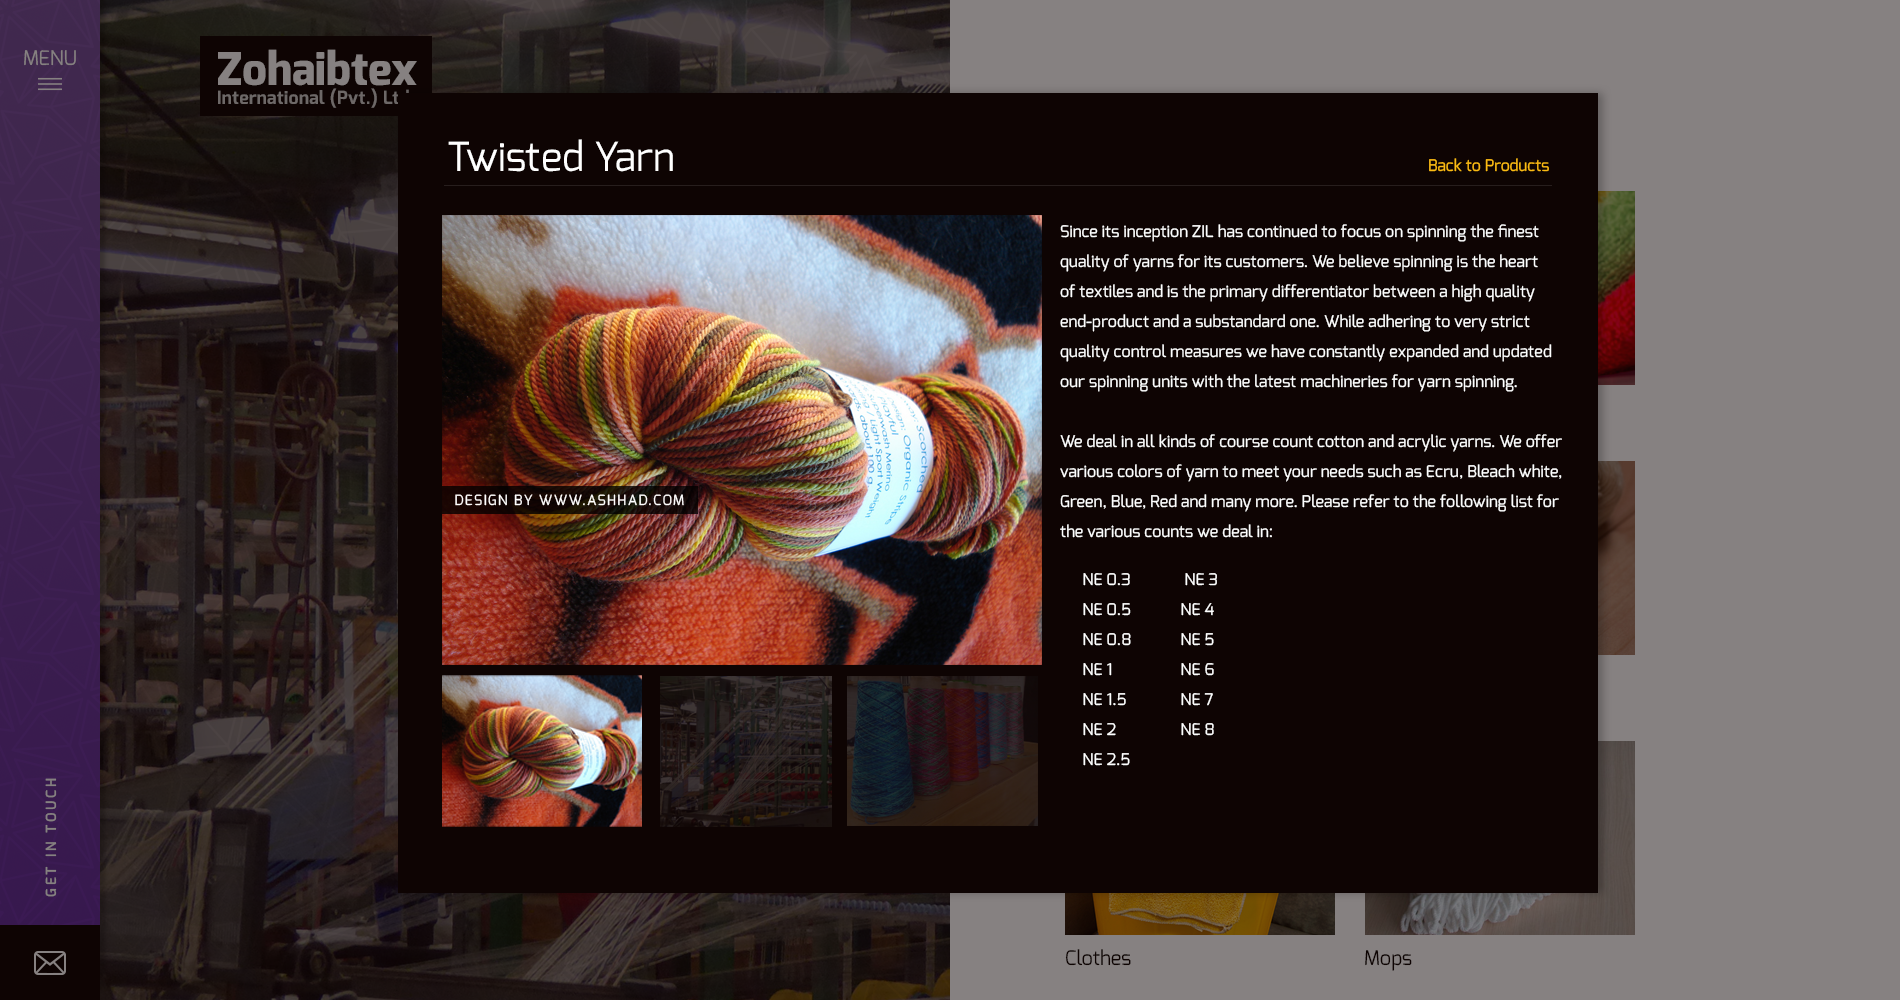 website design for textile company in karachi pakistan